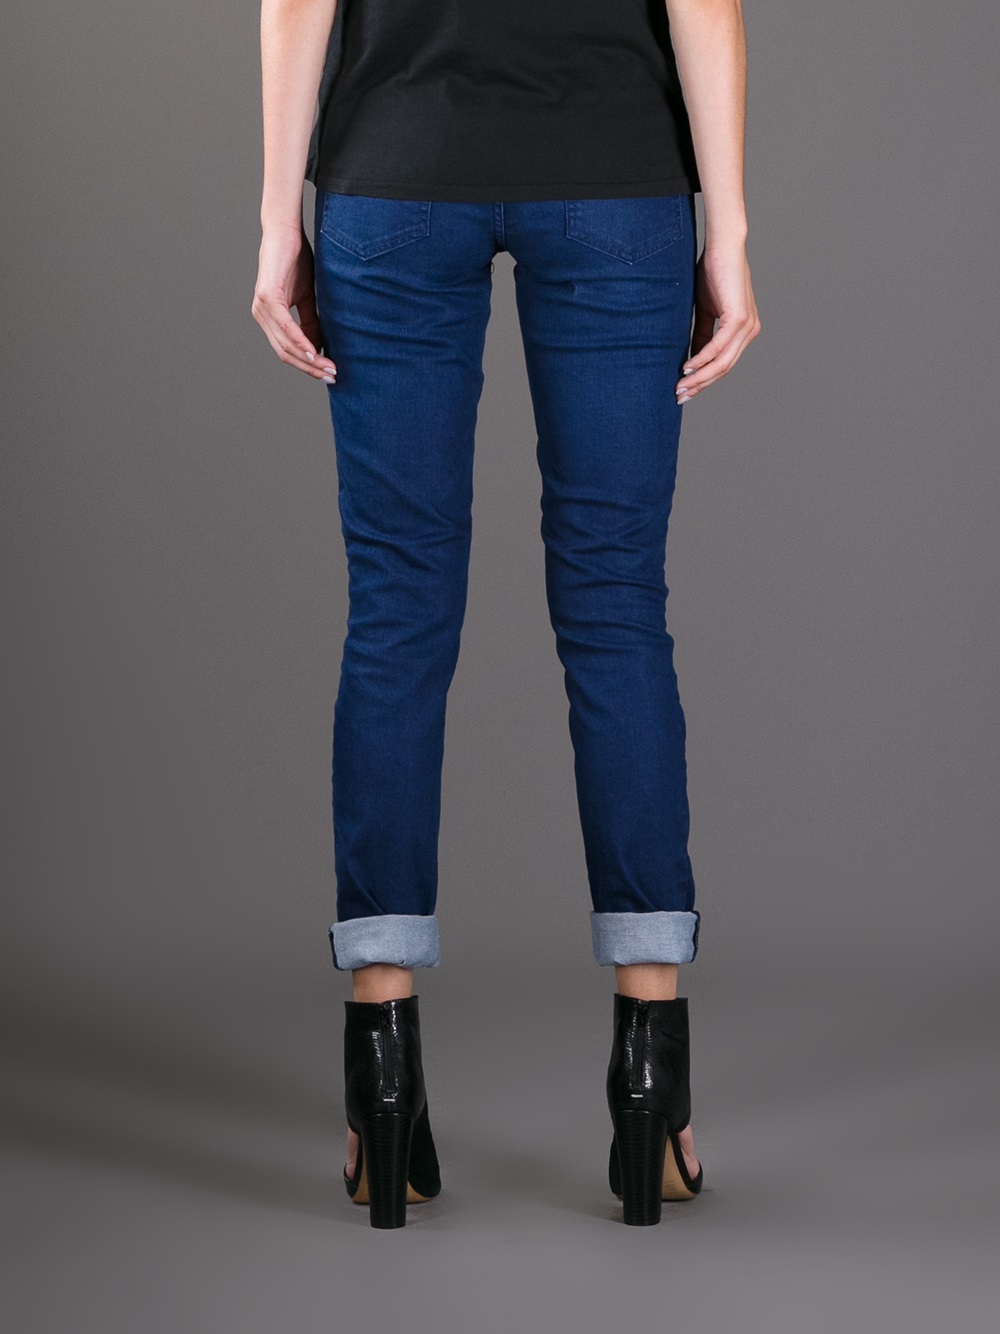 Acne Studios Flex Ocean Jeans in Blue - Lyst